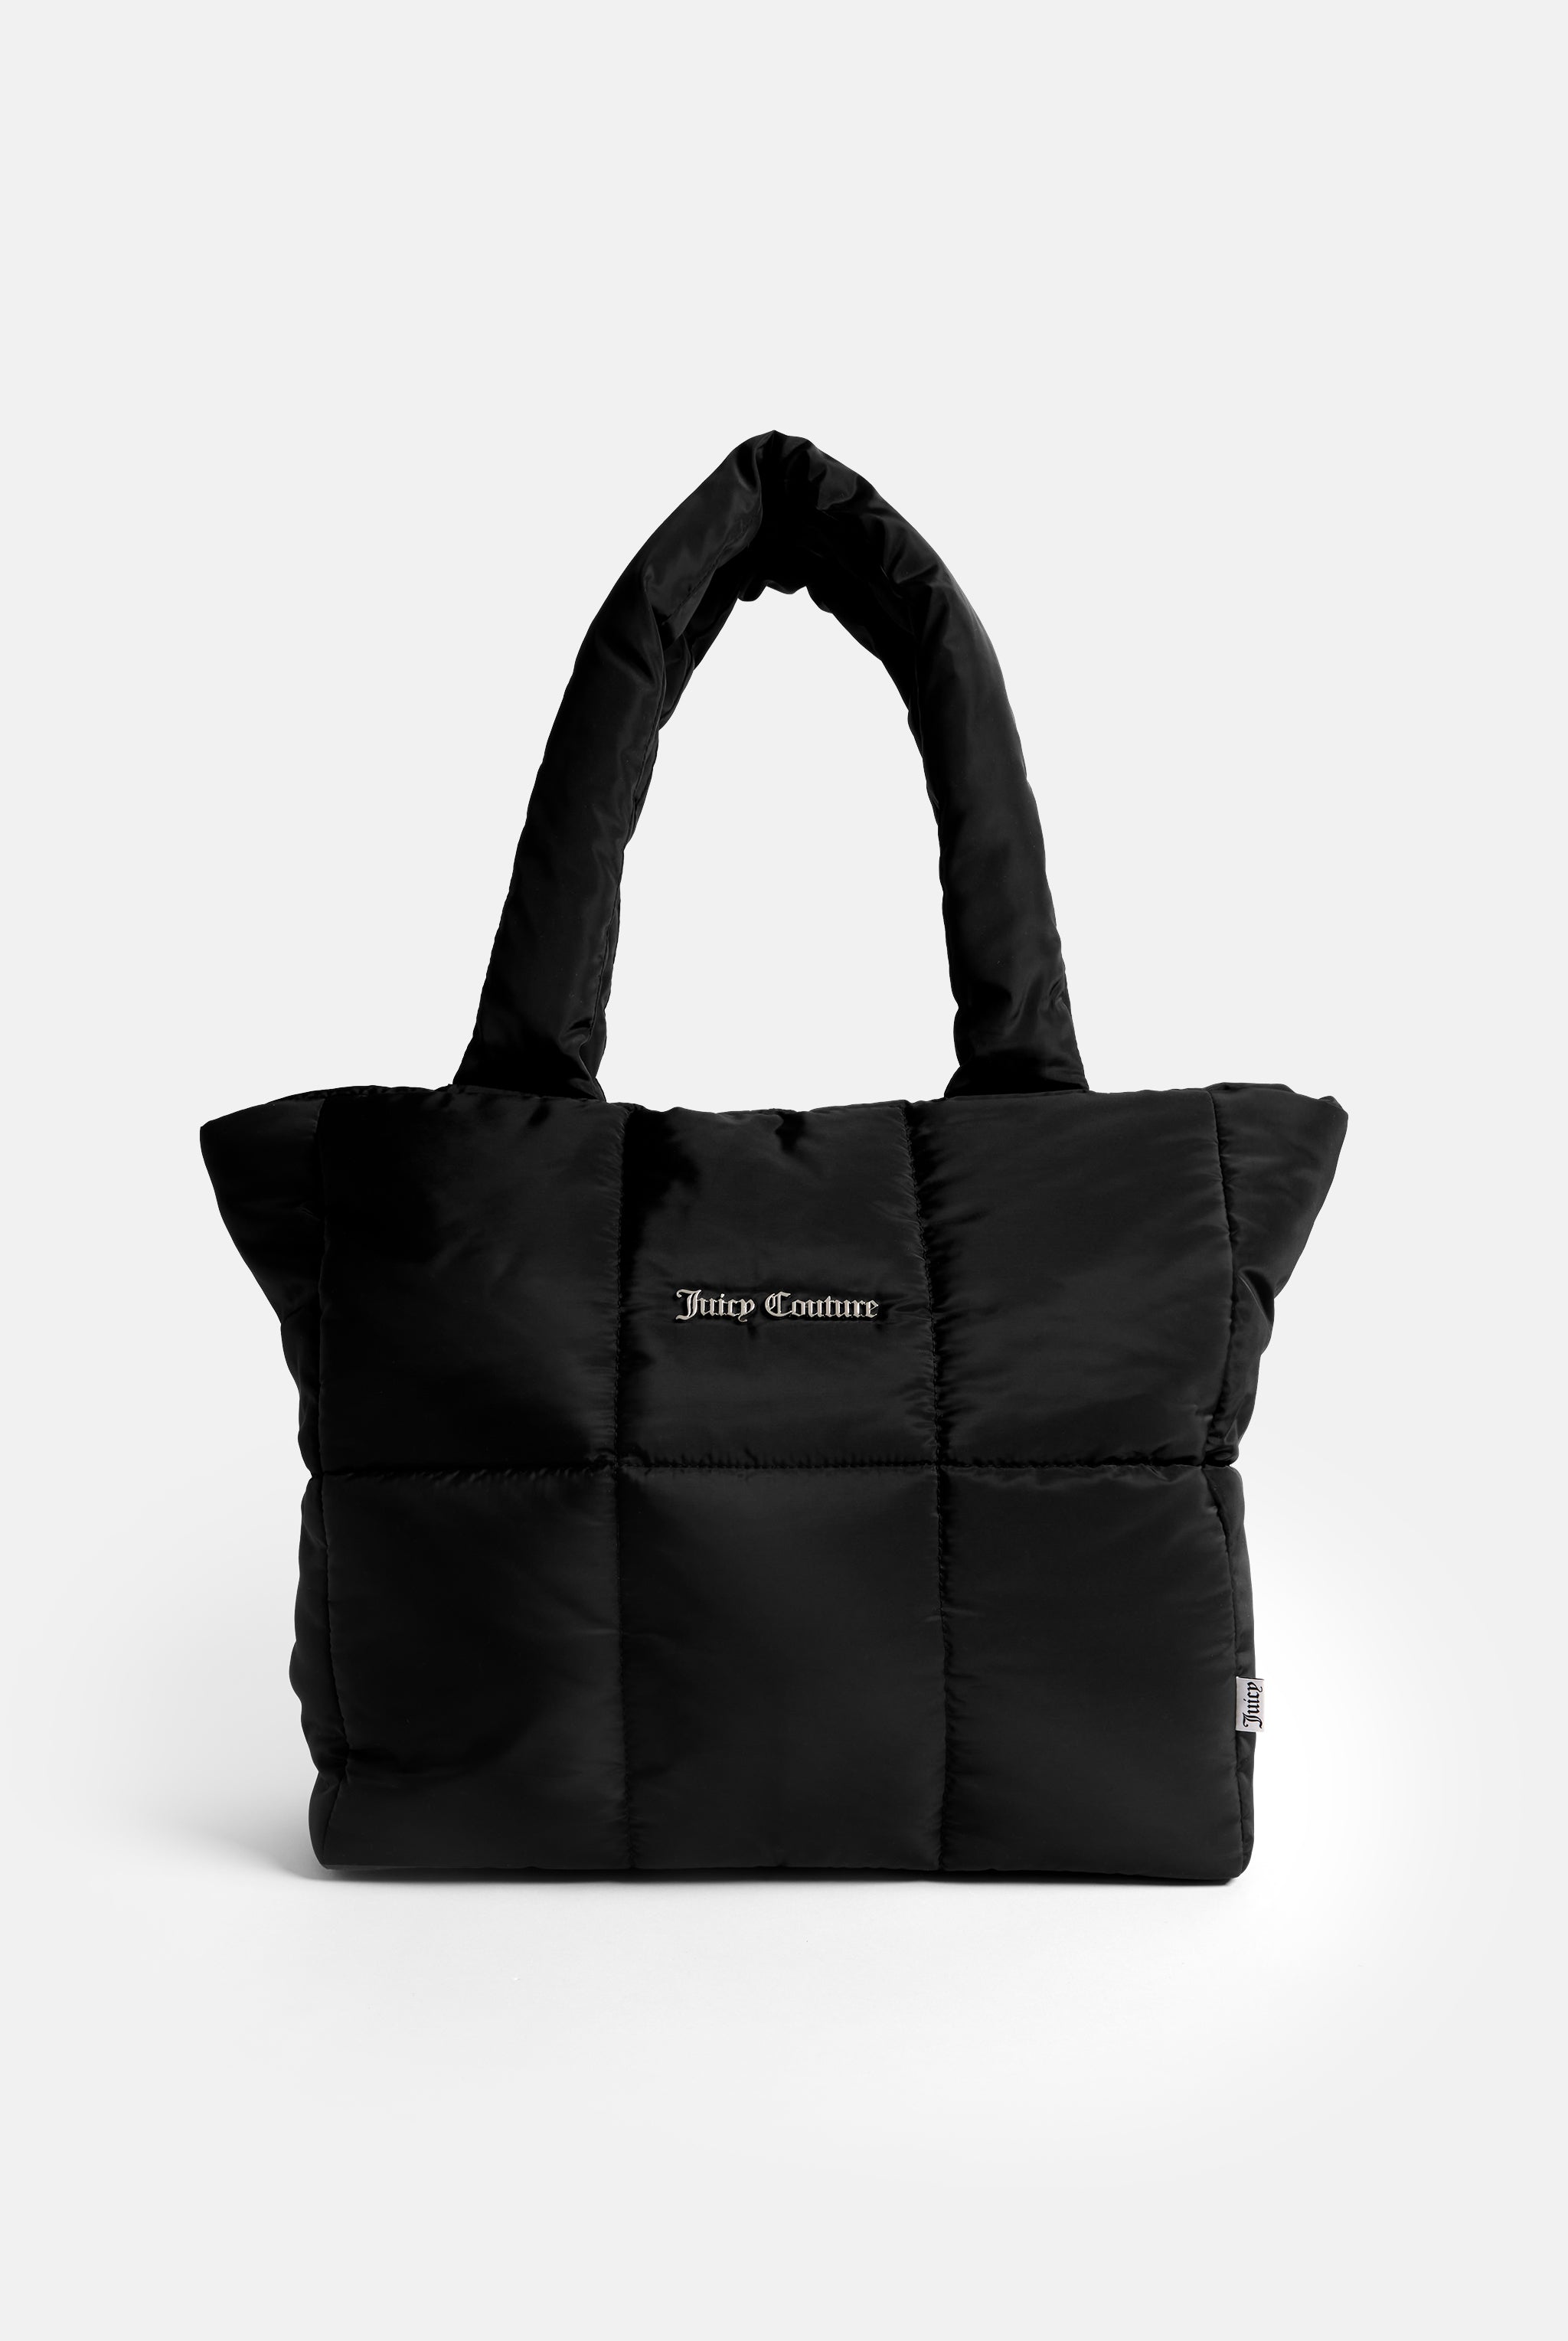 Juicy Couture Black Leather Handbag - Ruby Lane